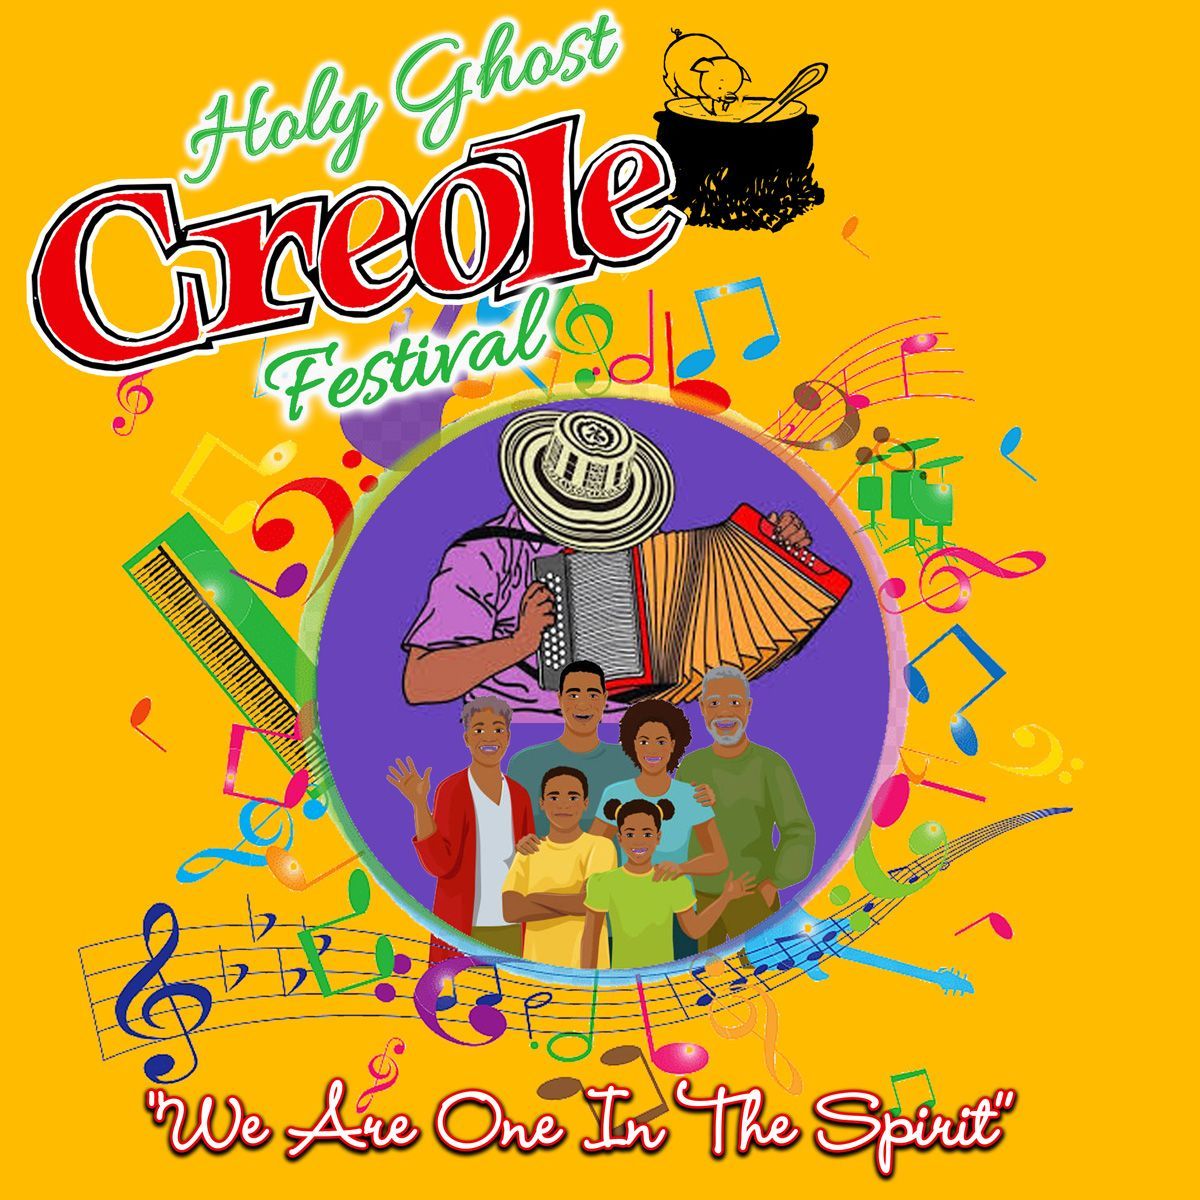 Holy Ghost Catholic Church Creole Festival